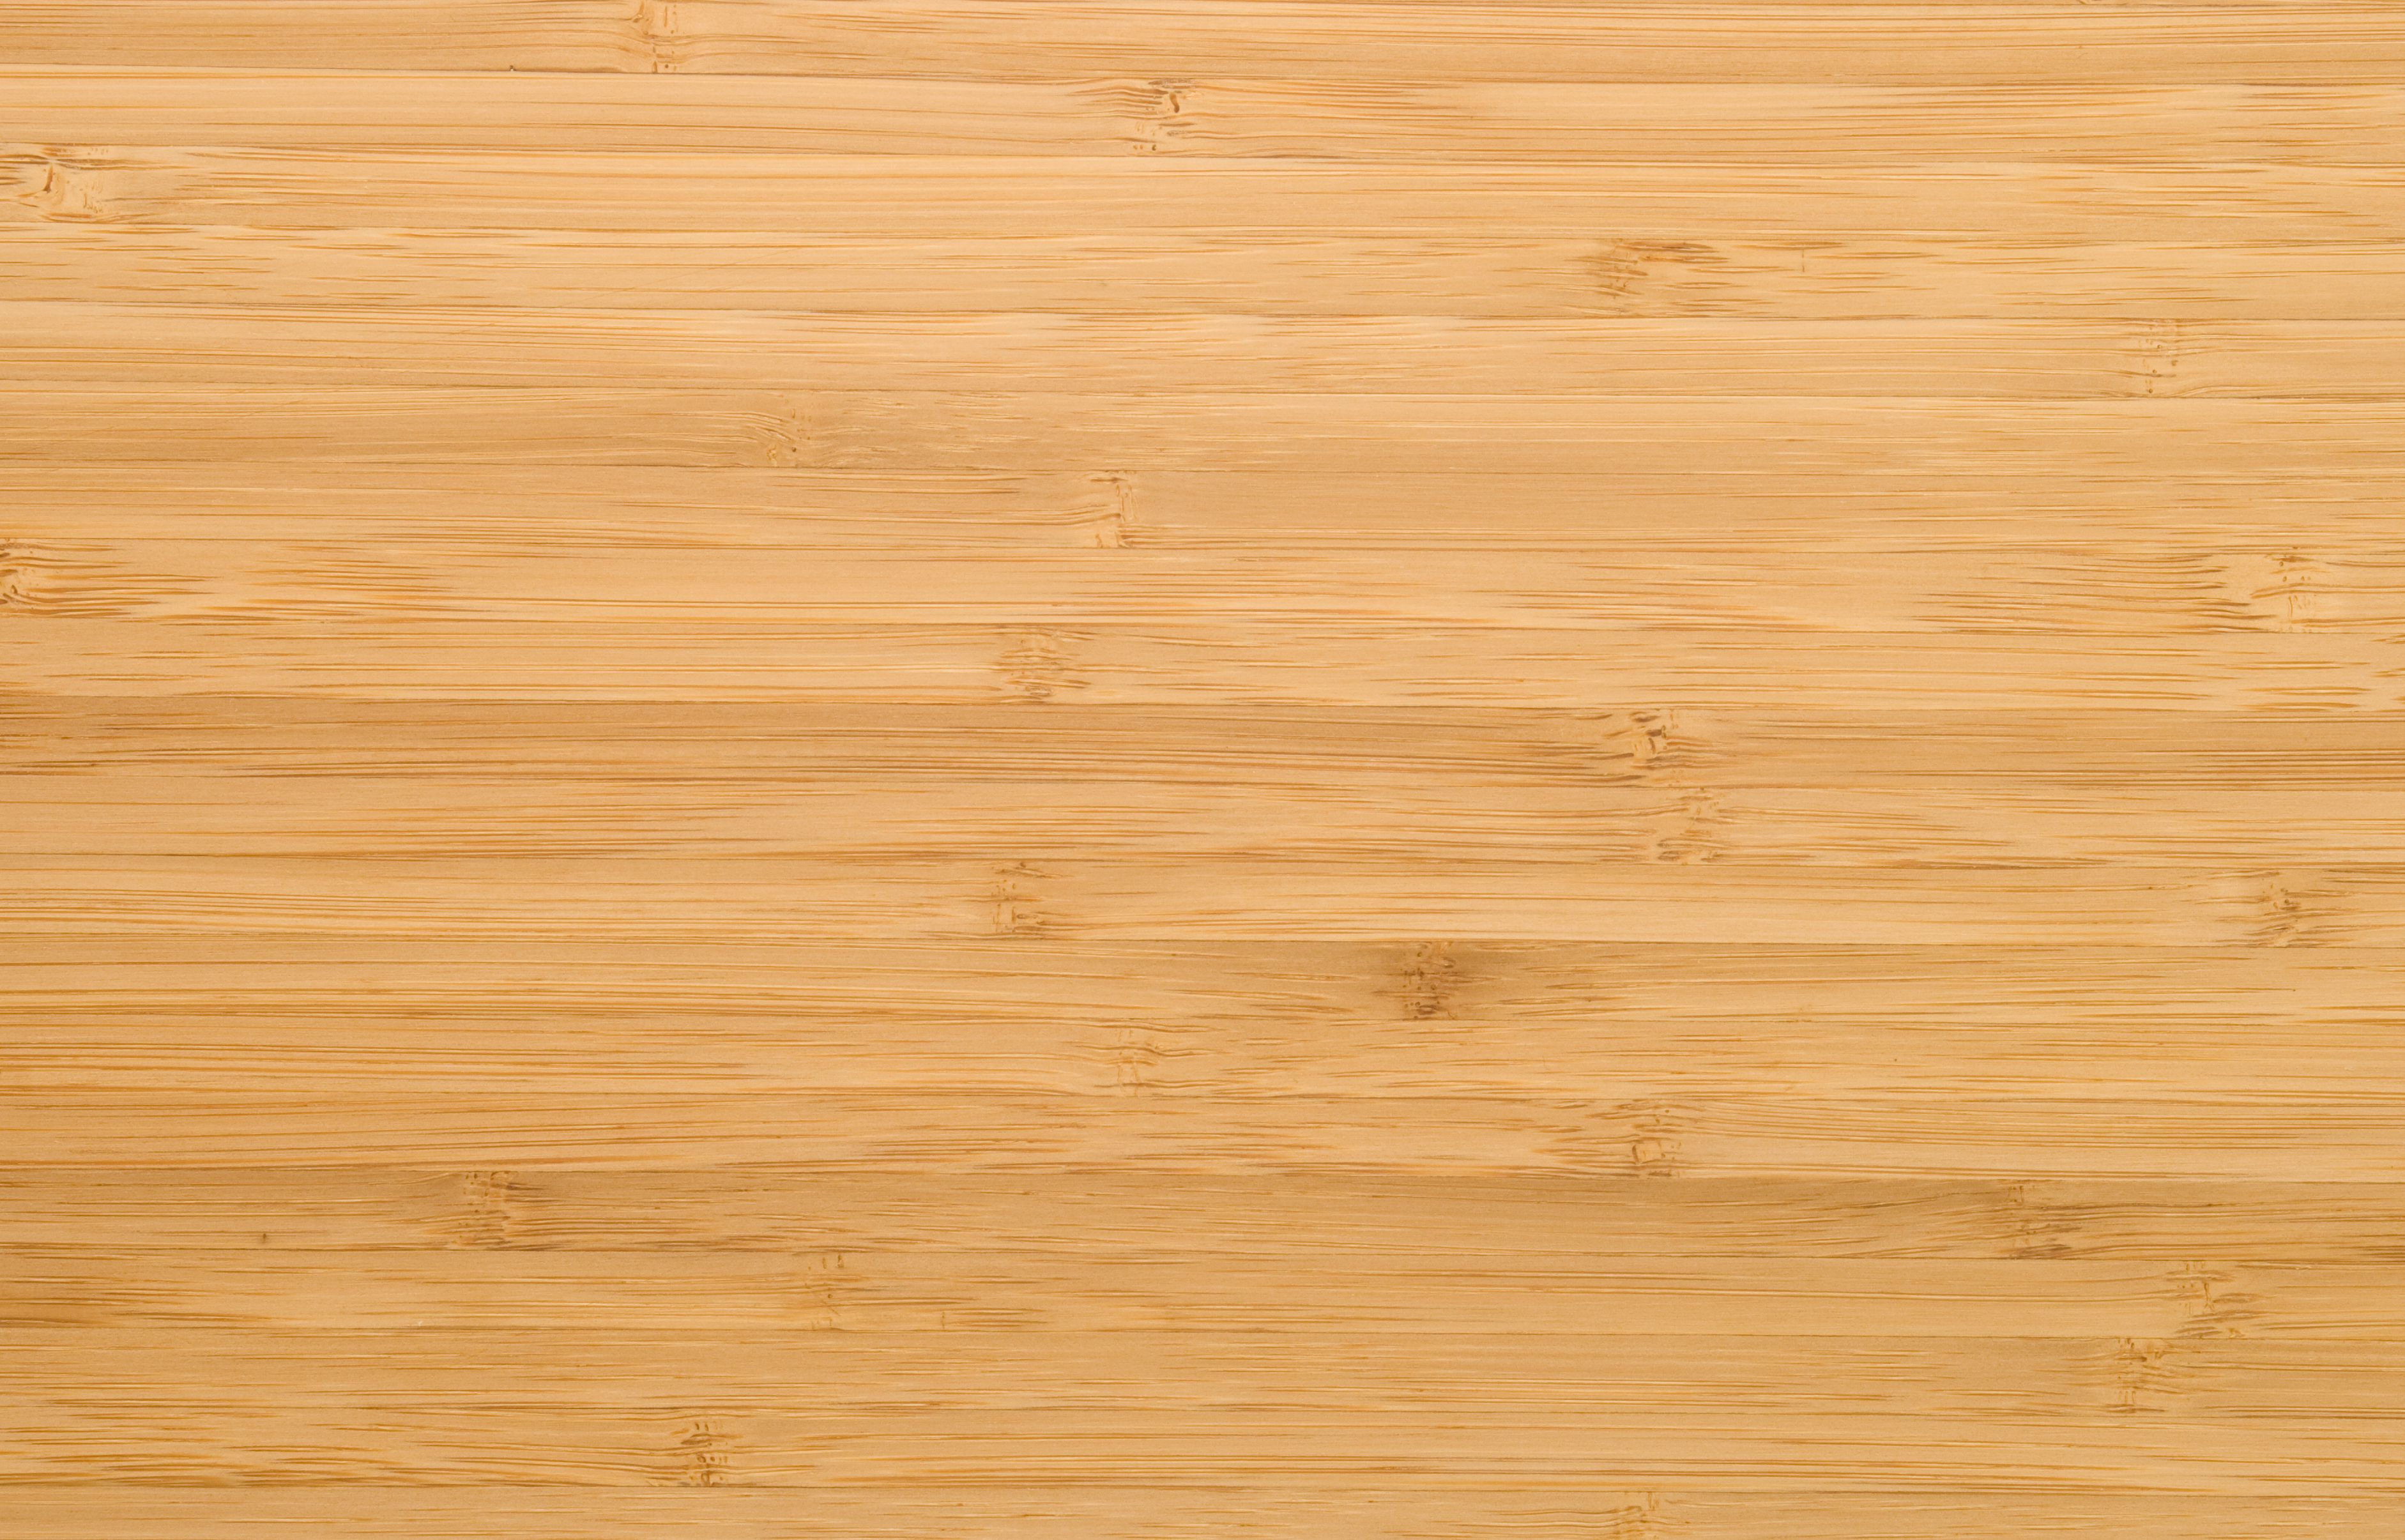 17 attractive Hardwood Floor Wax Filler 2024 free download hardwood floor wax filler of can you use a wet mop on bamboo floors throughout natural bamboo plank 94259870 59aeefd4519de20010d5c648